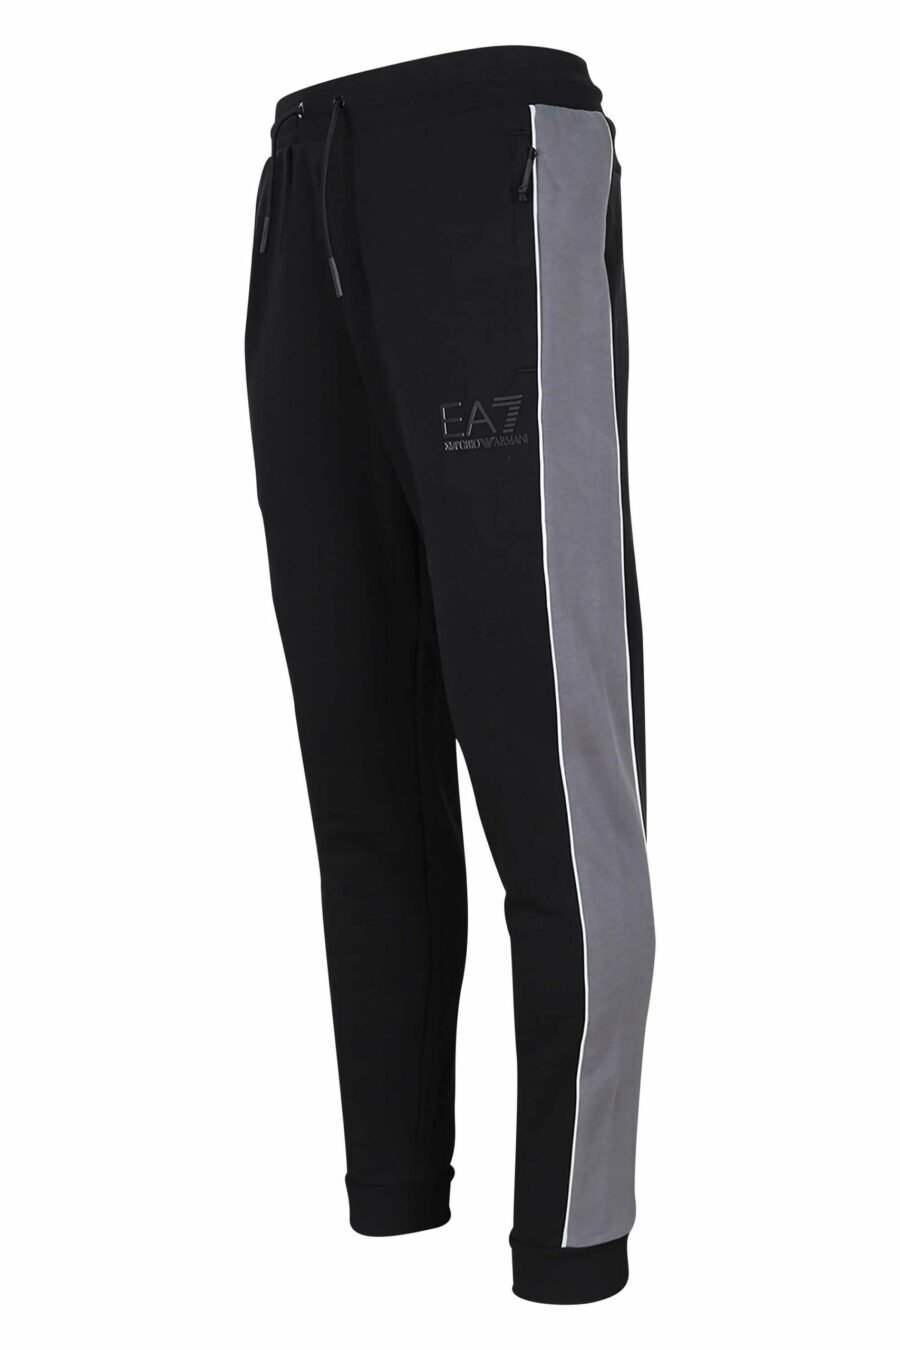 Pantalón de chándal negro con lineas grises laterales y minilogo "lux identity" - 8056787946842 1 scaled